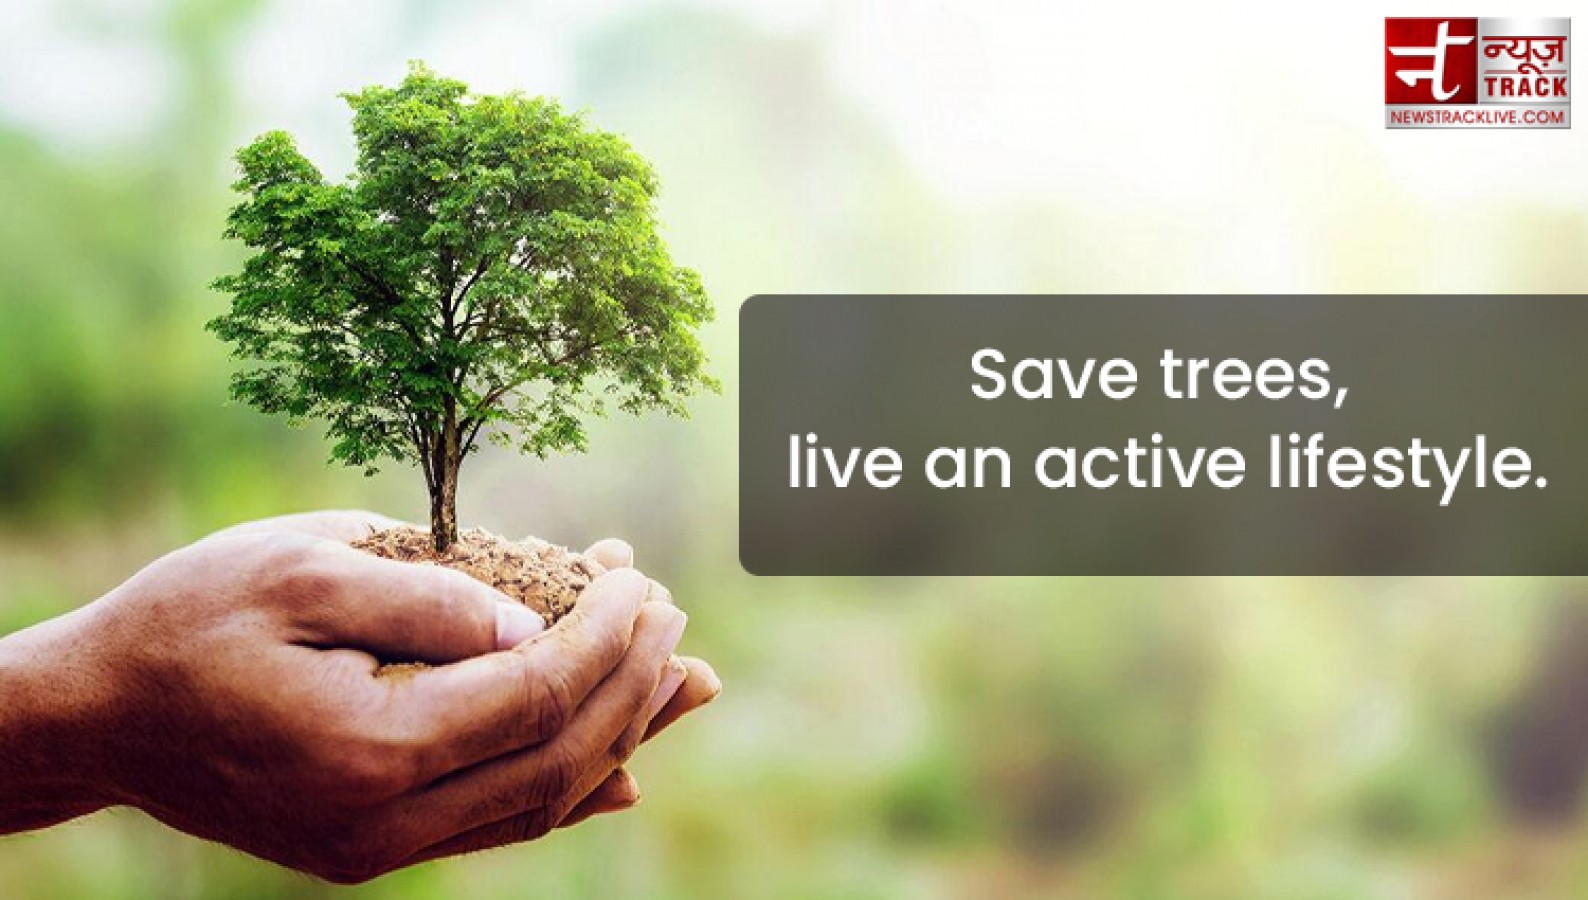 Astonishing Compilation of Full 4K "Save Tree" Slogan Images - Ov...